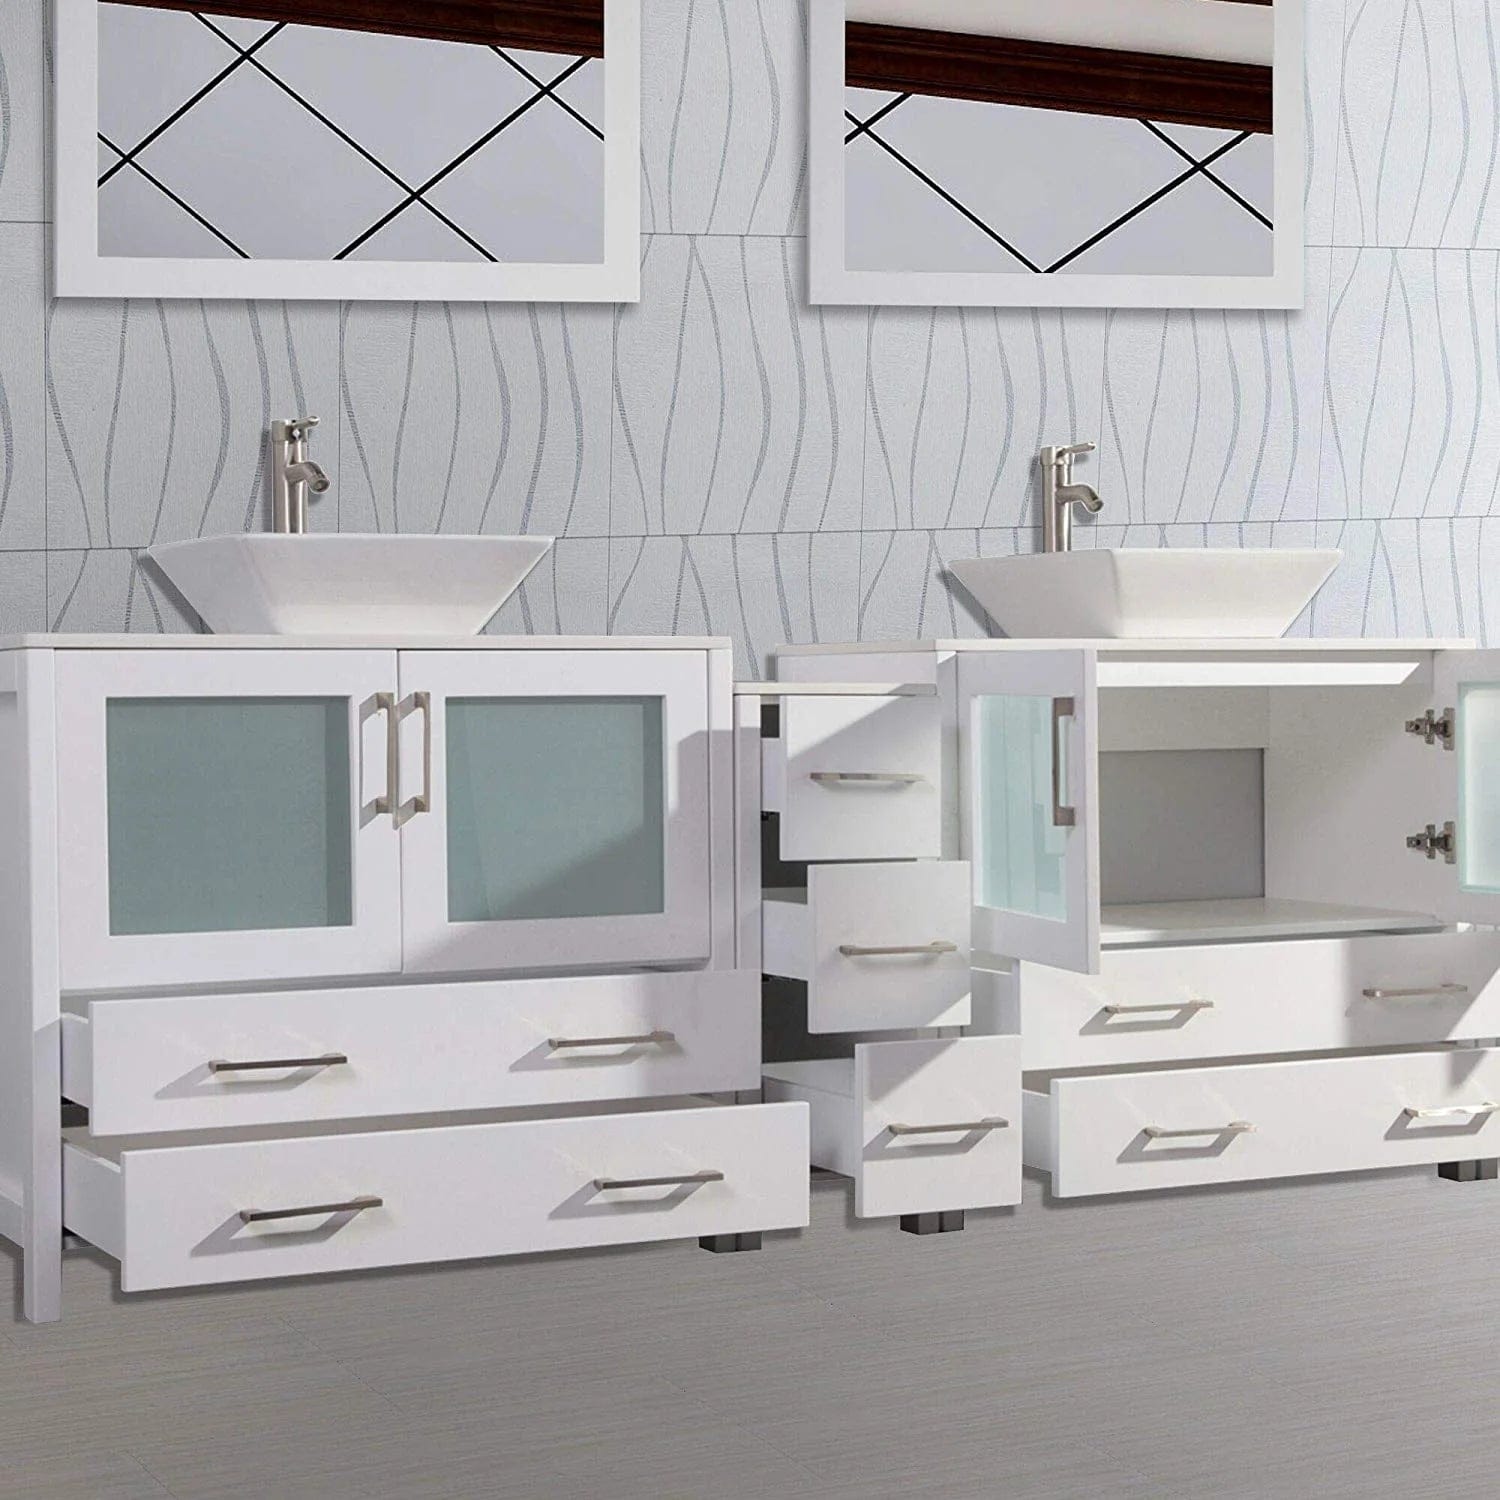 108 in. Double Sink Bathroom Vanity Combo Set in White - Decohub Home